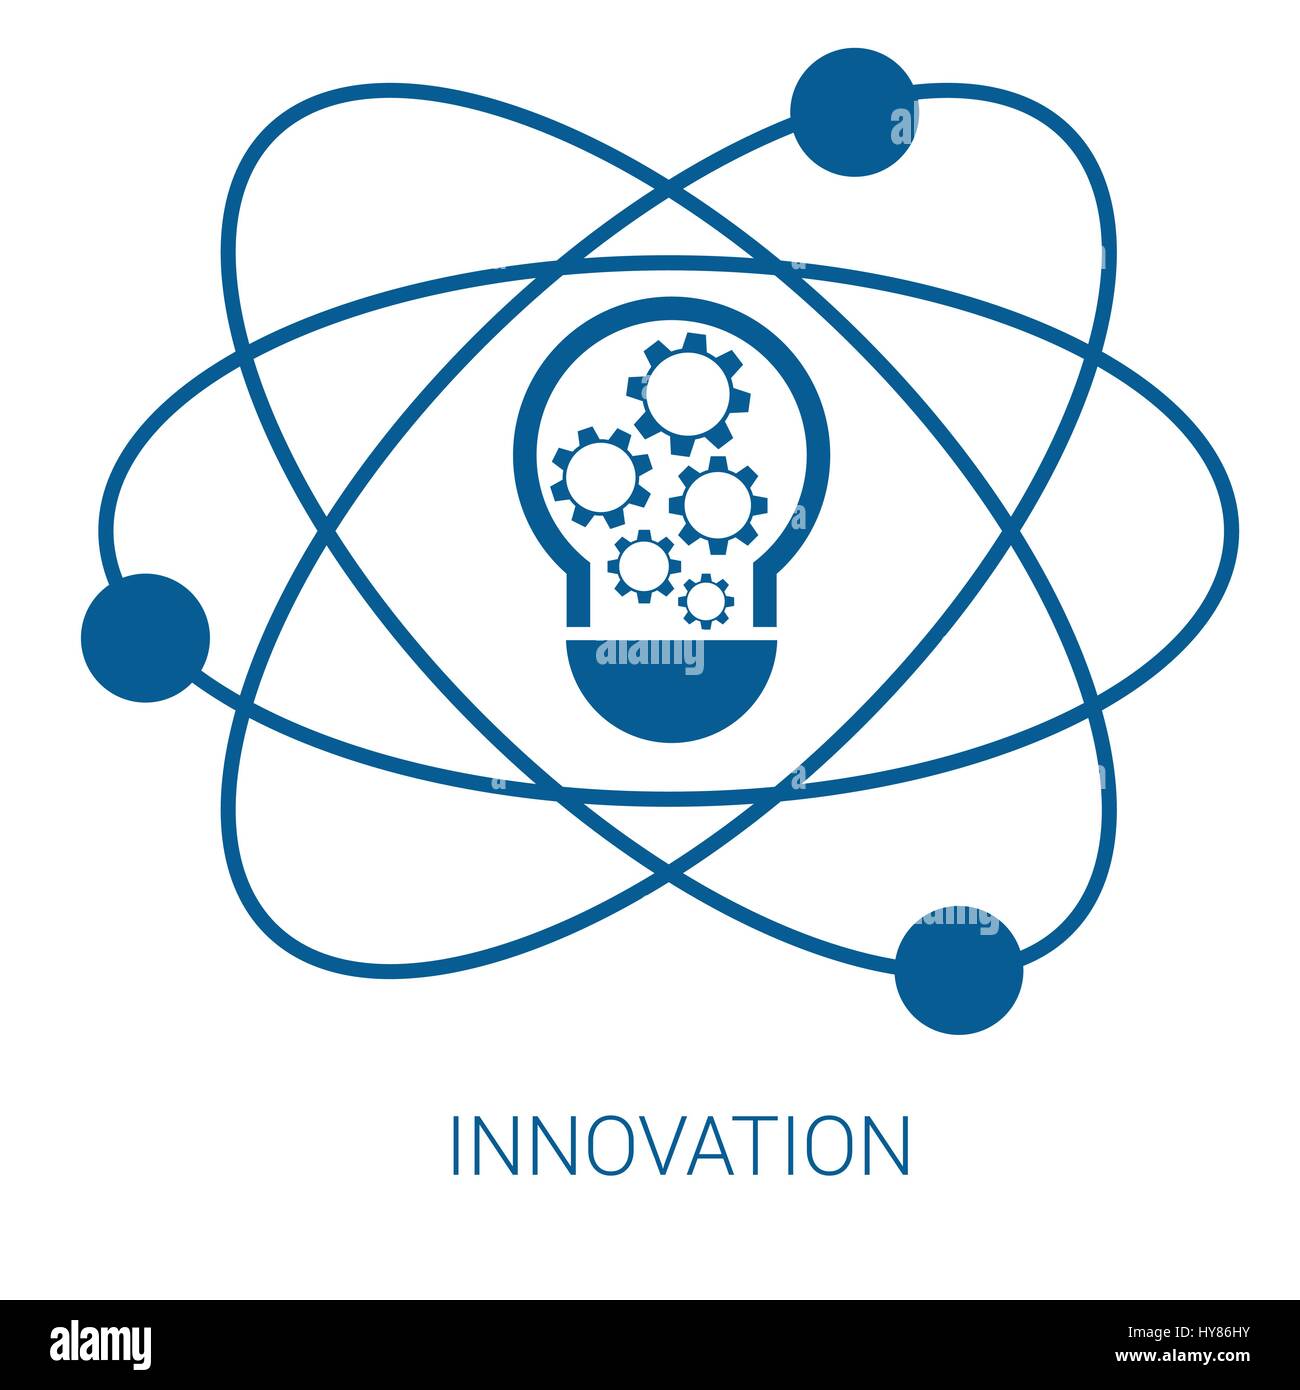 Innovation Inc Logo